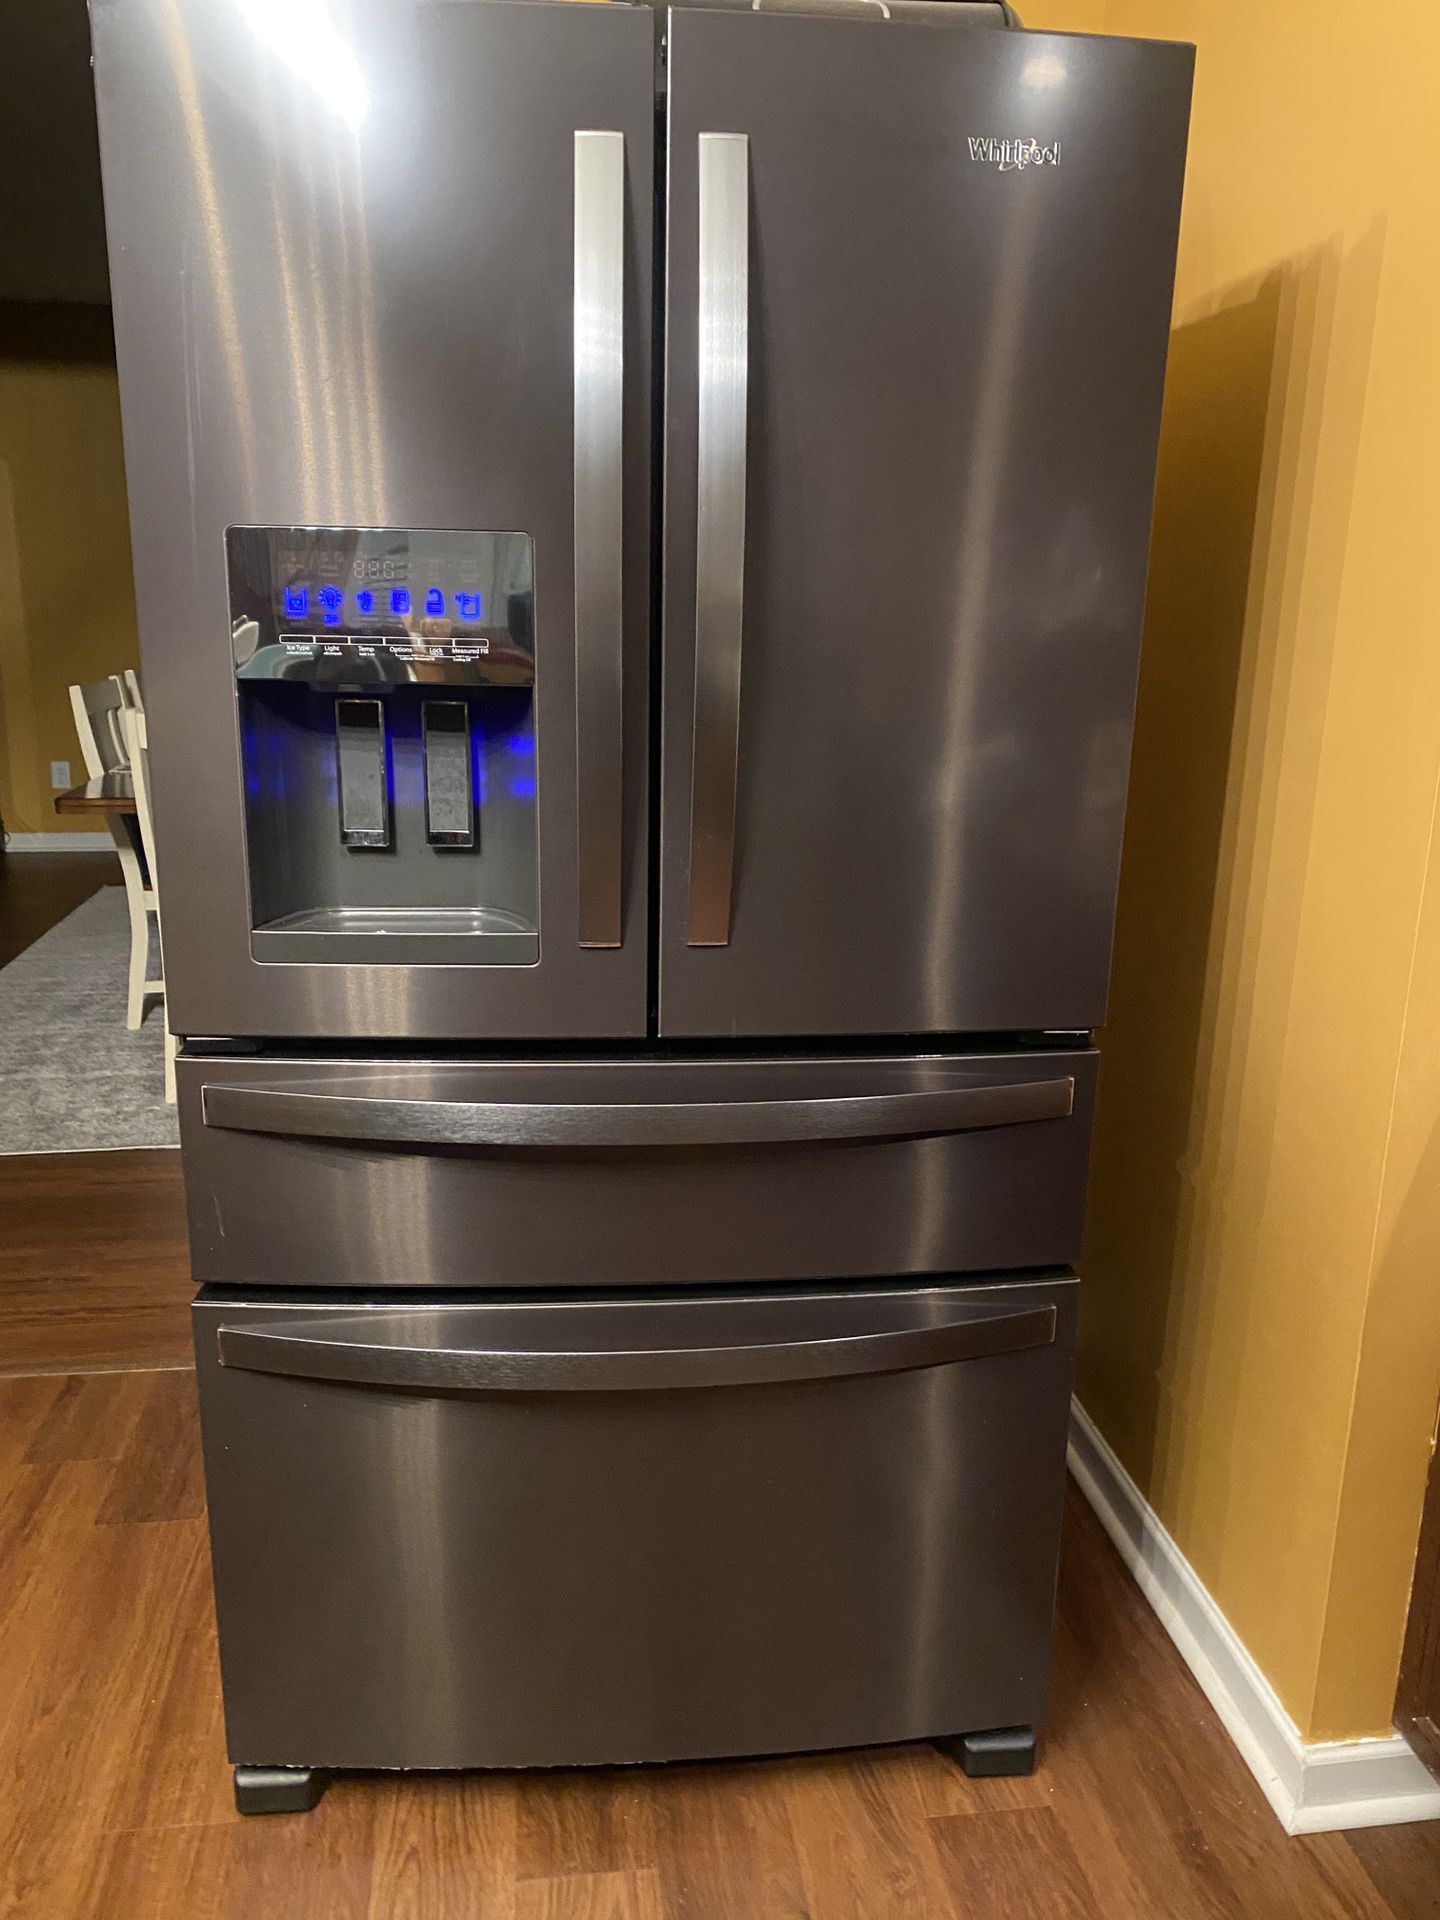 Whirlpool Refrigerator and Kenmore Range, Hood, and Dishwasher